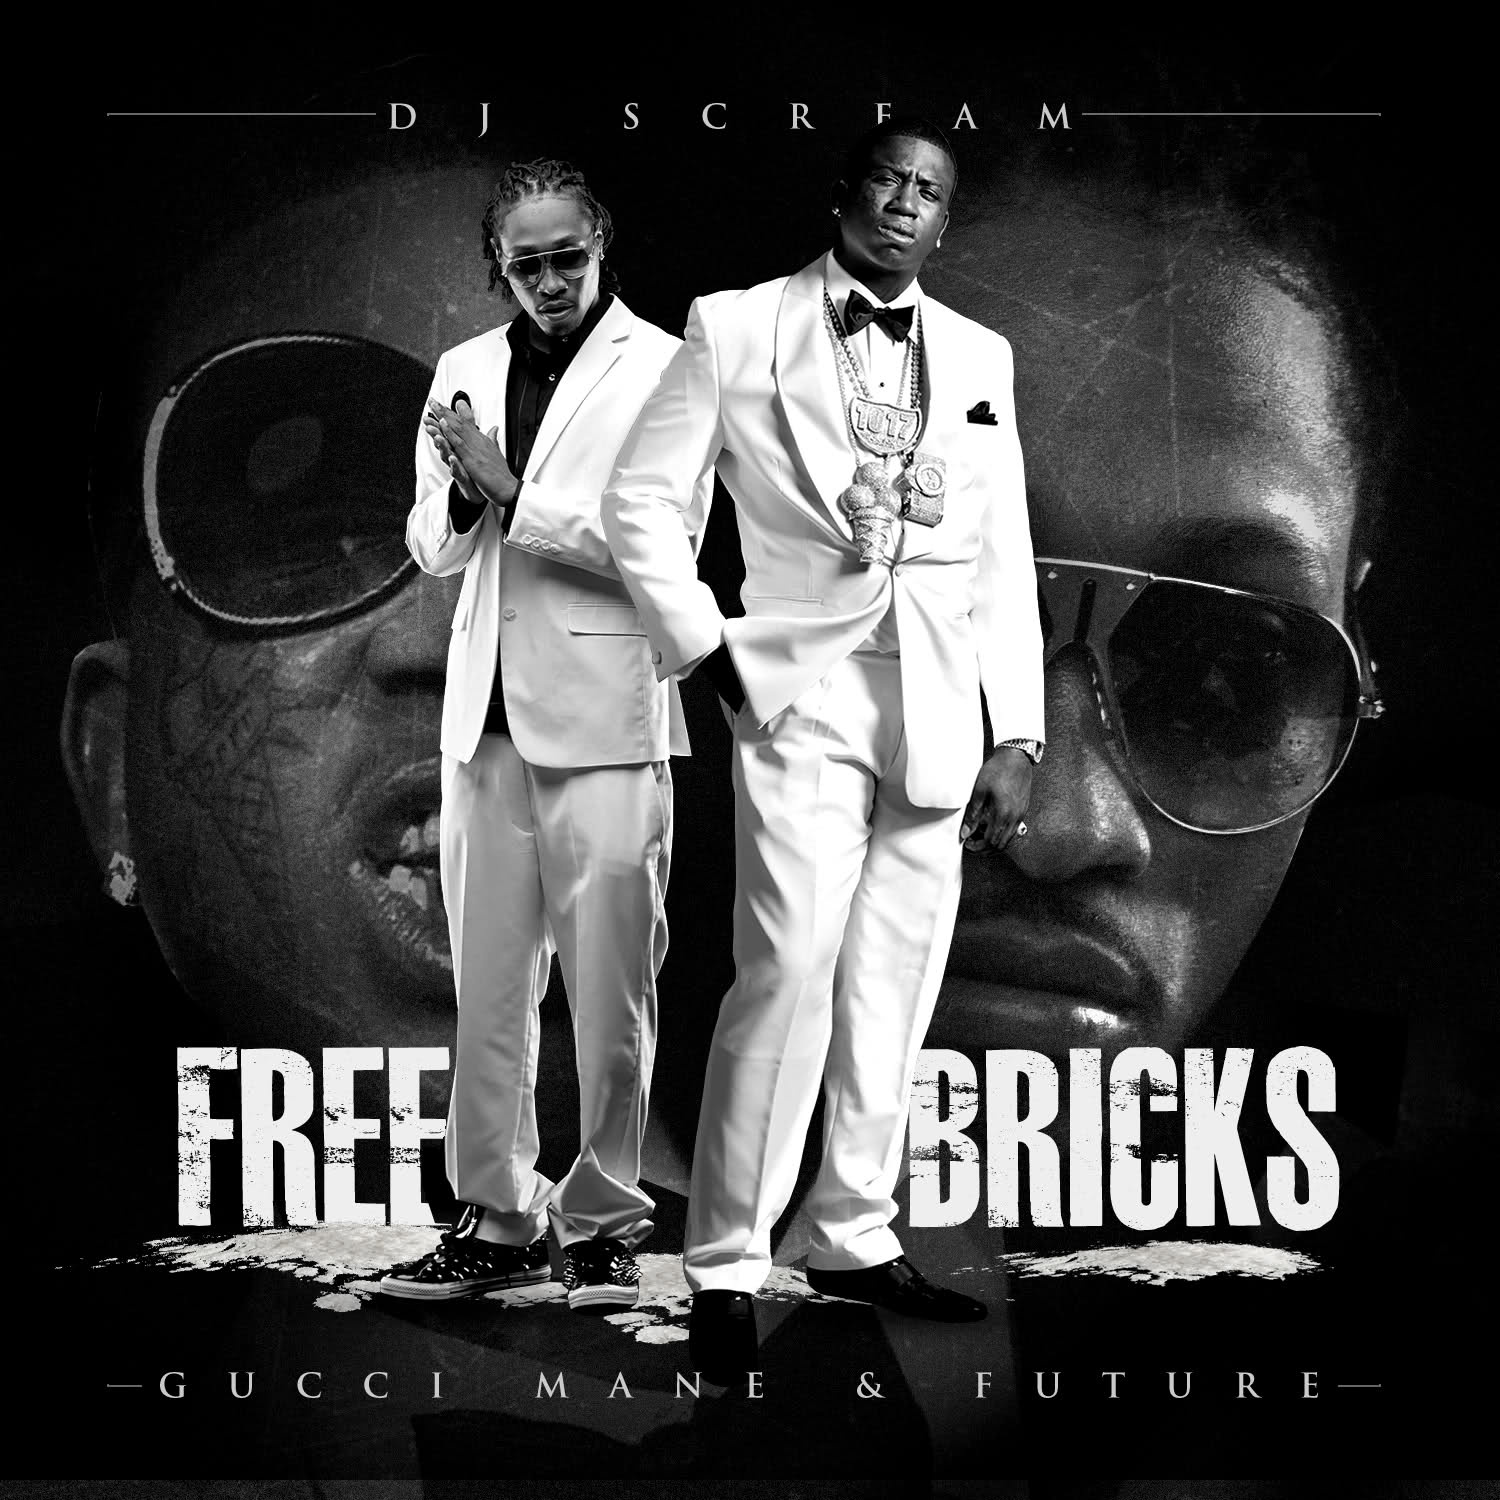 Gucci Mane & Future - Free Bricks | Tiny Mix Tapes